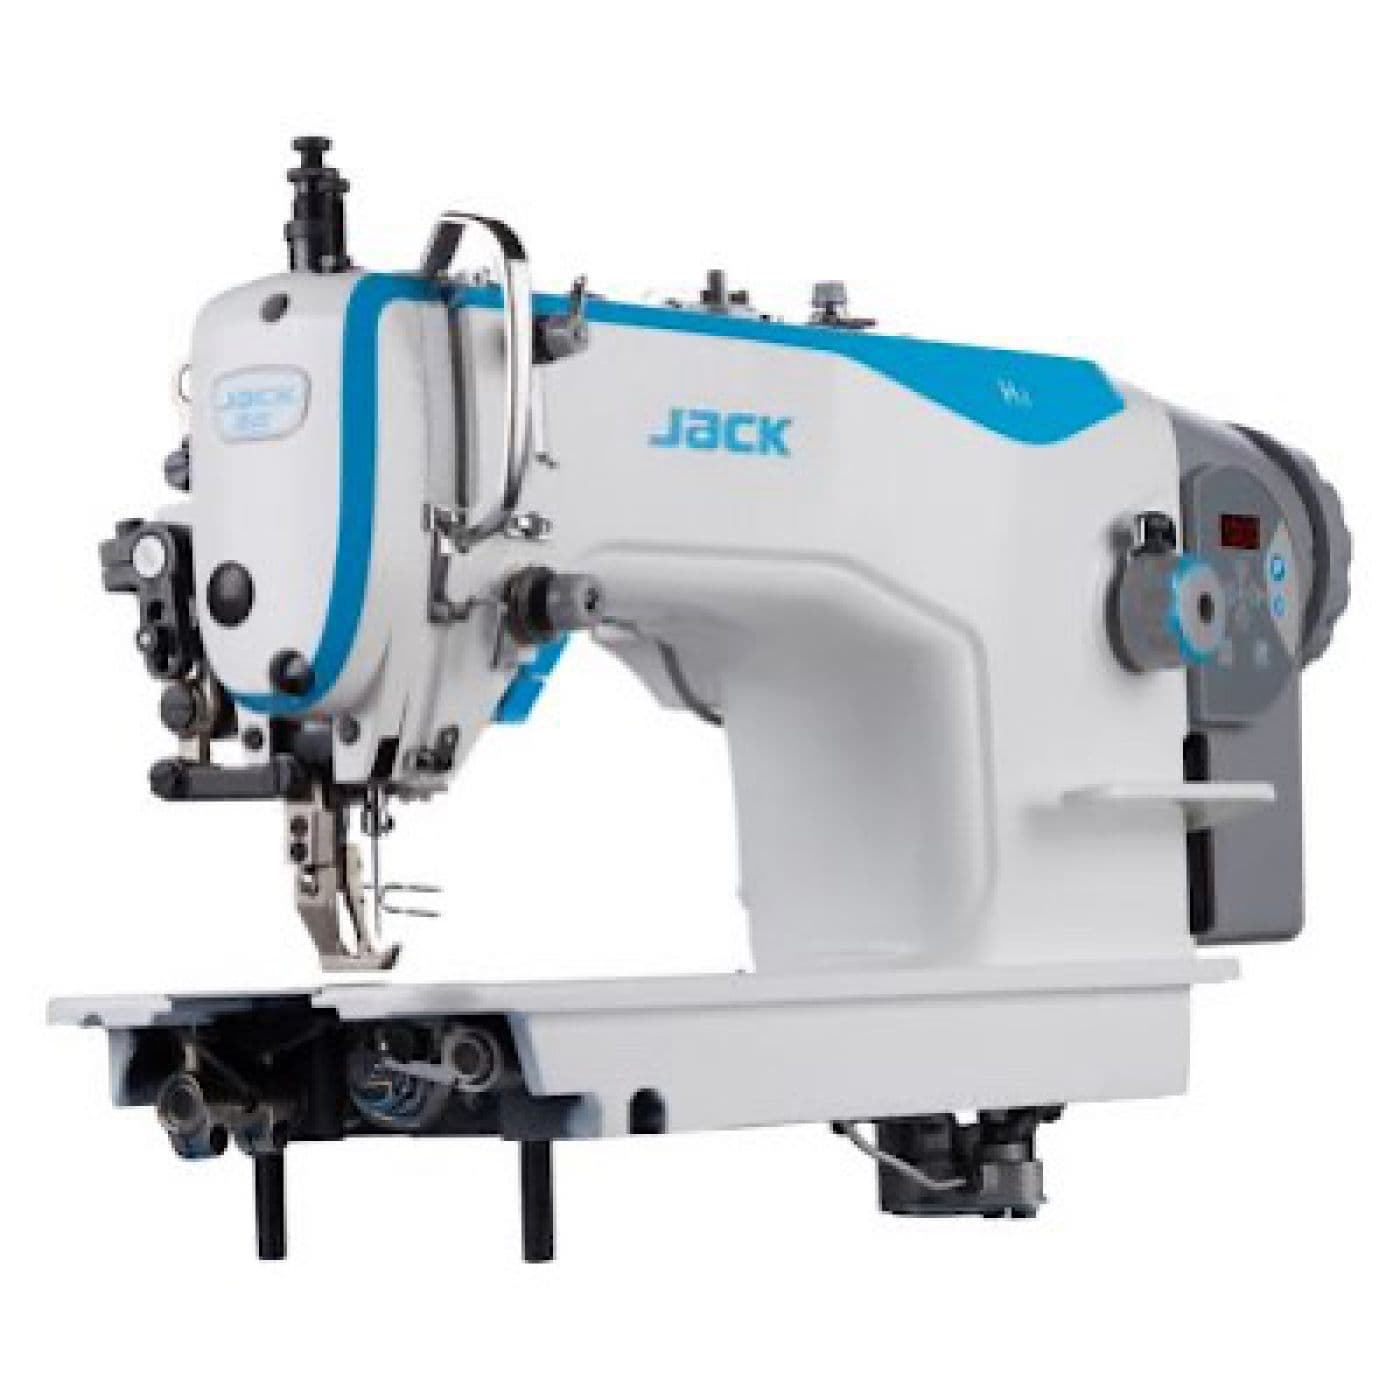 JACK H2 DOBLE ARRASTRE - Máquina de coser industrial doble arrastre - Imagen 3